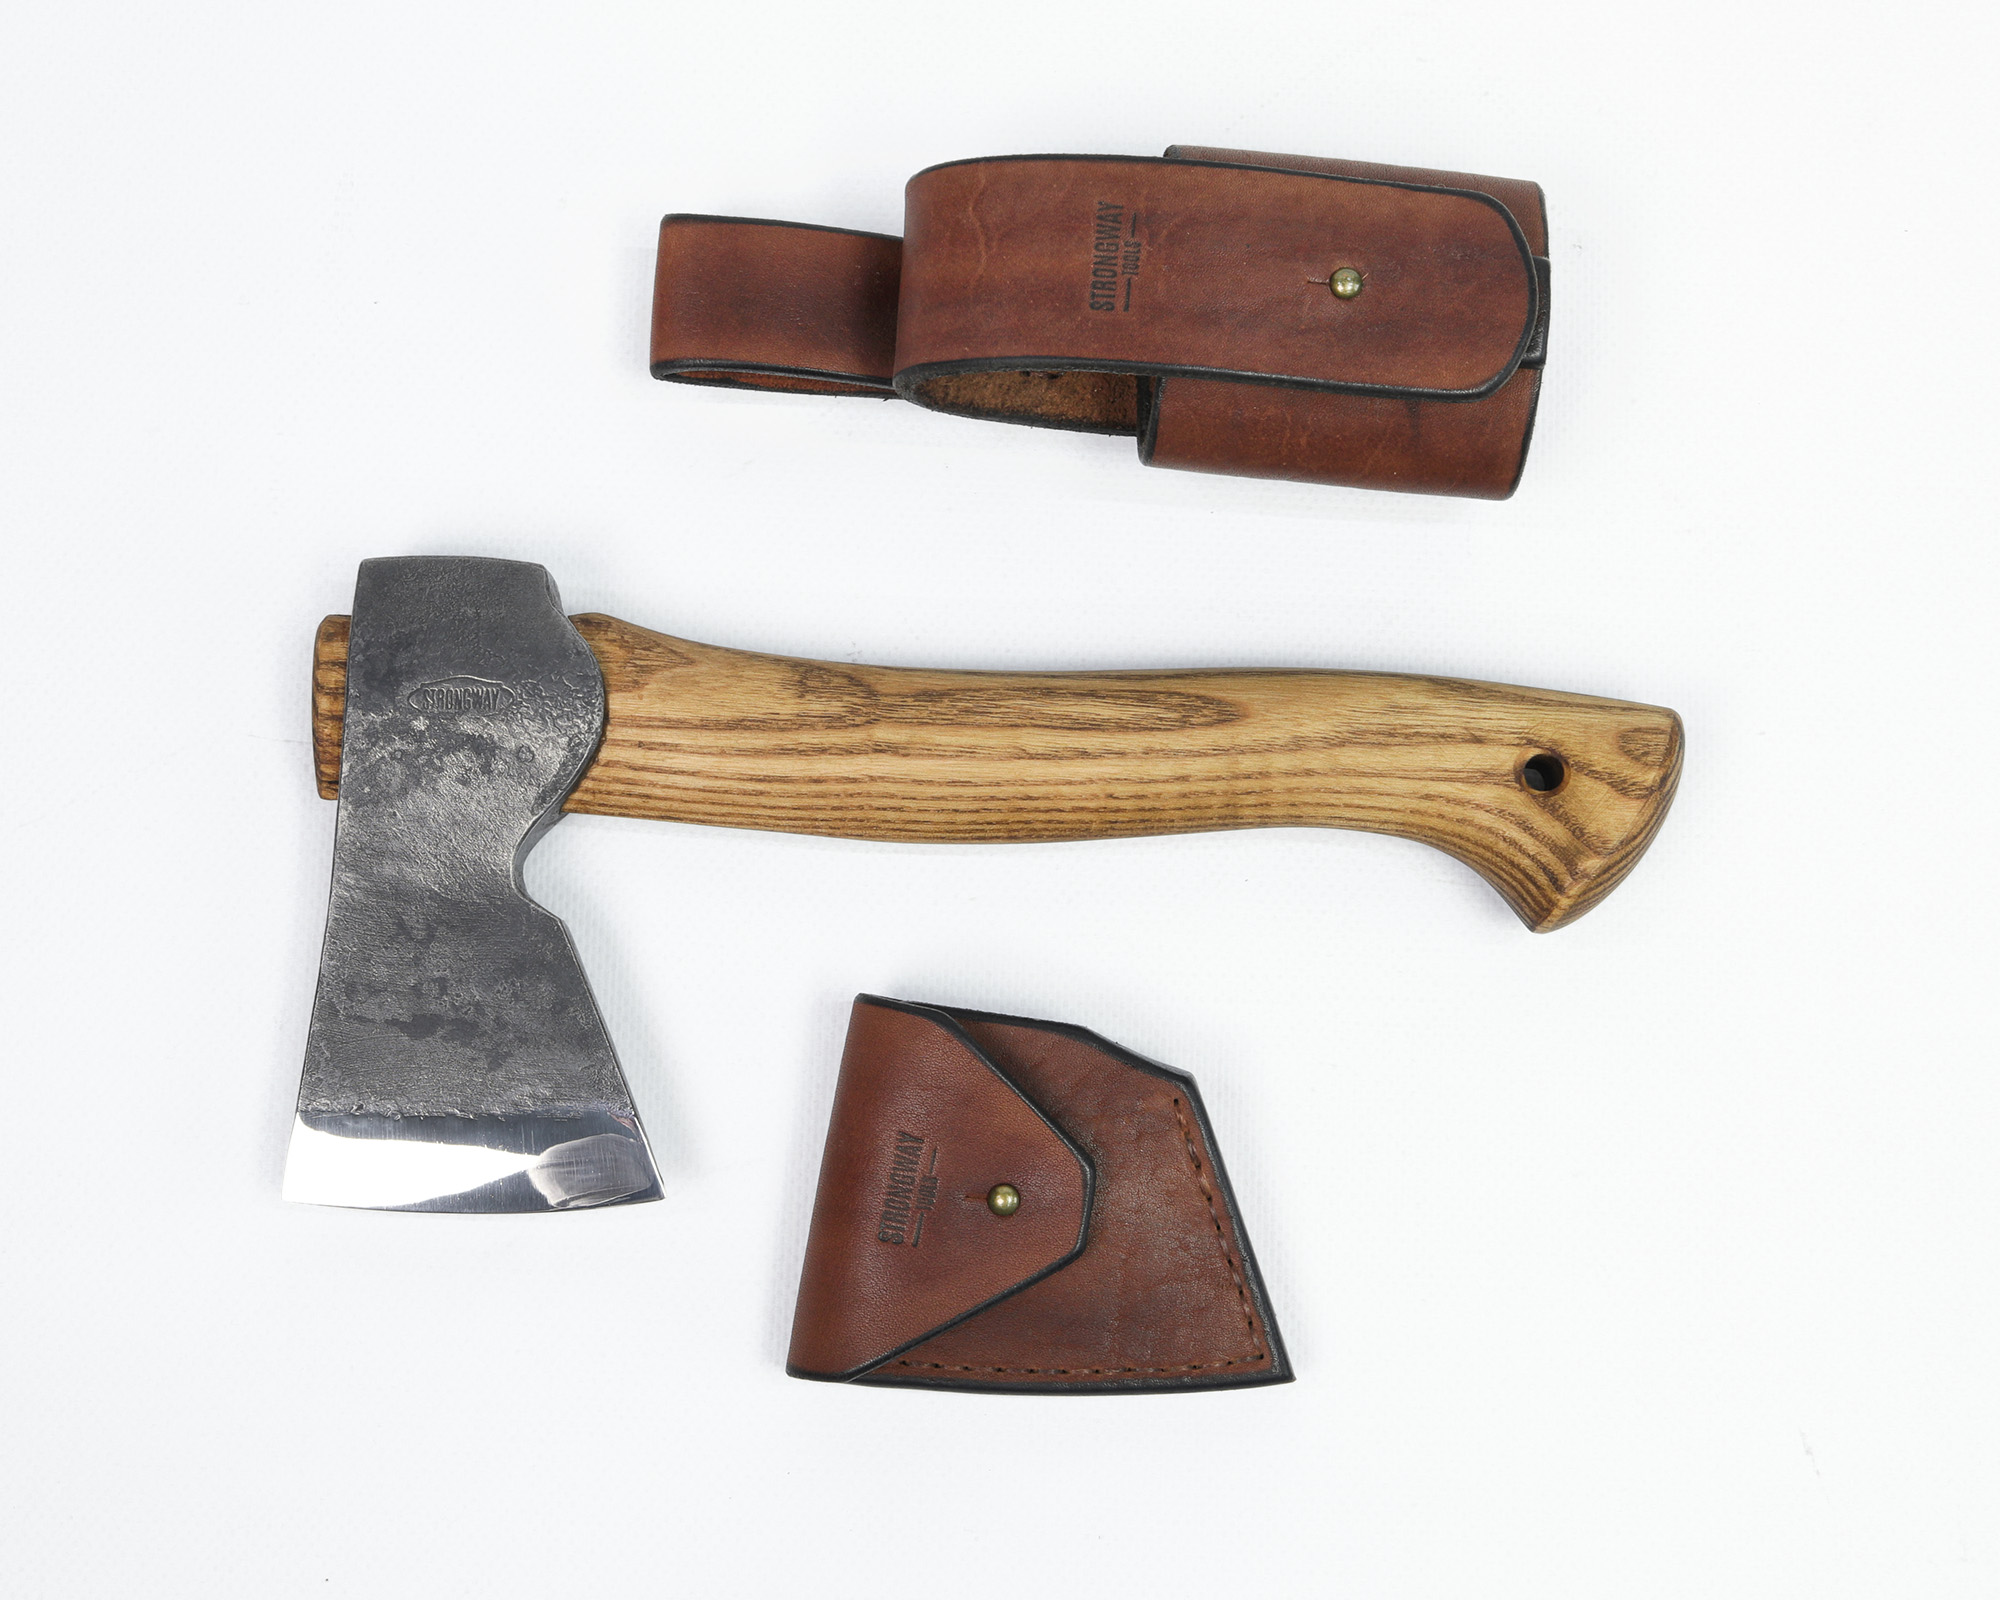 Handmade Bushcraft Knife with Sheath > STRONGWAY TOOLS, L.L.C.